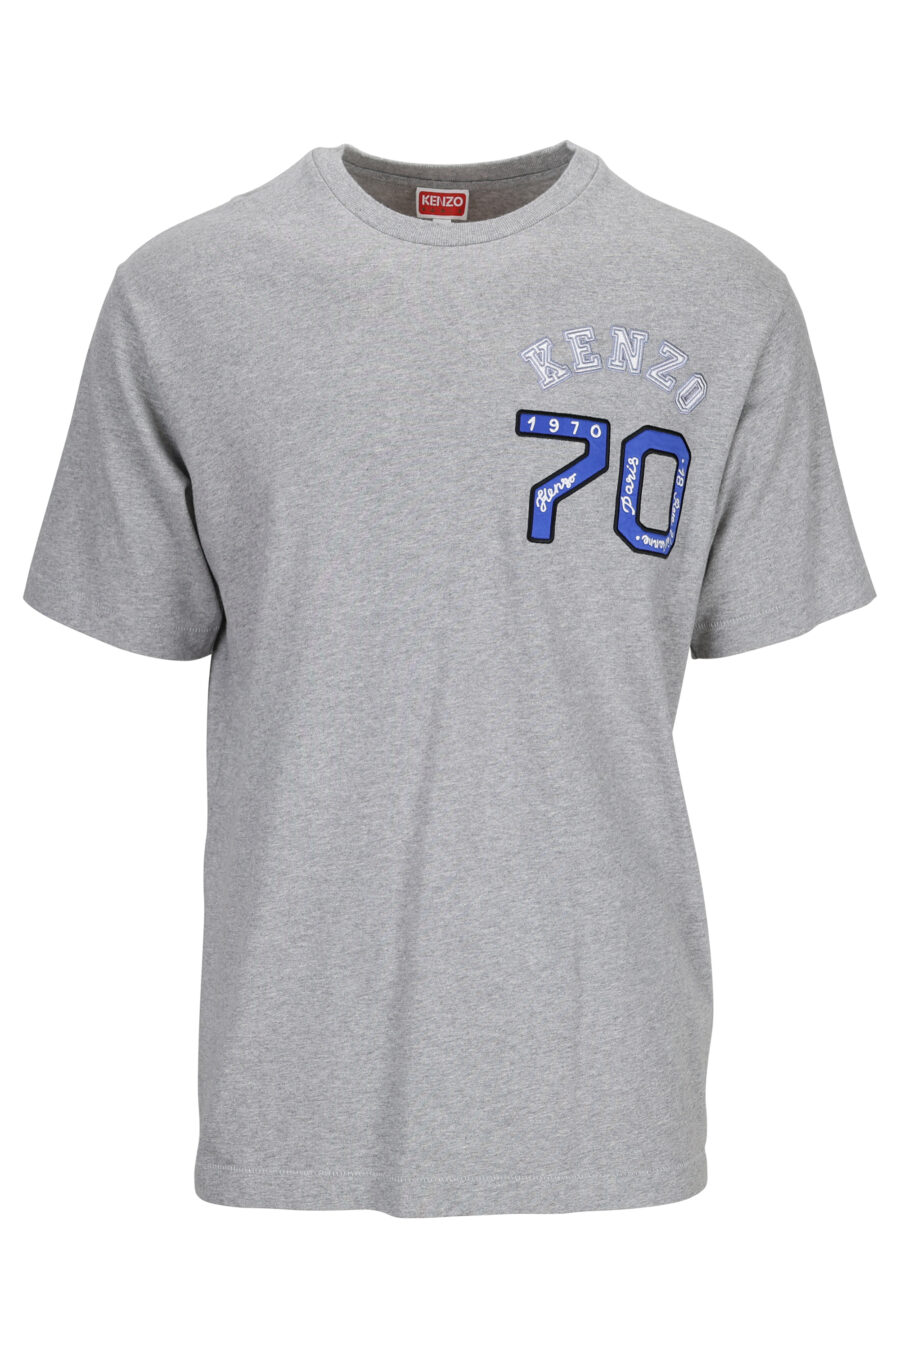 T-shirt gris avec logo "kenzo academy" - 3612230545502